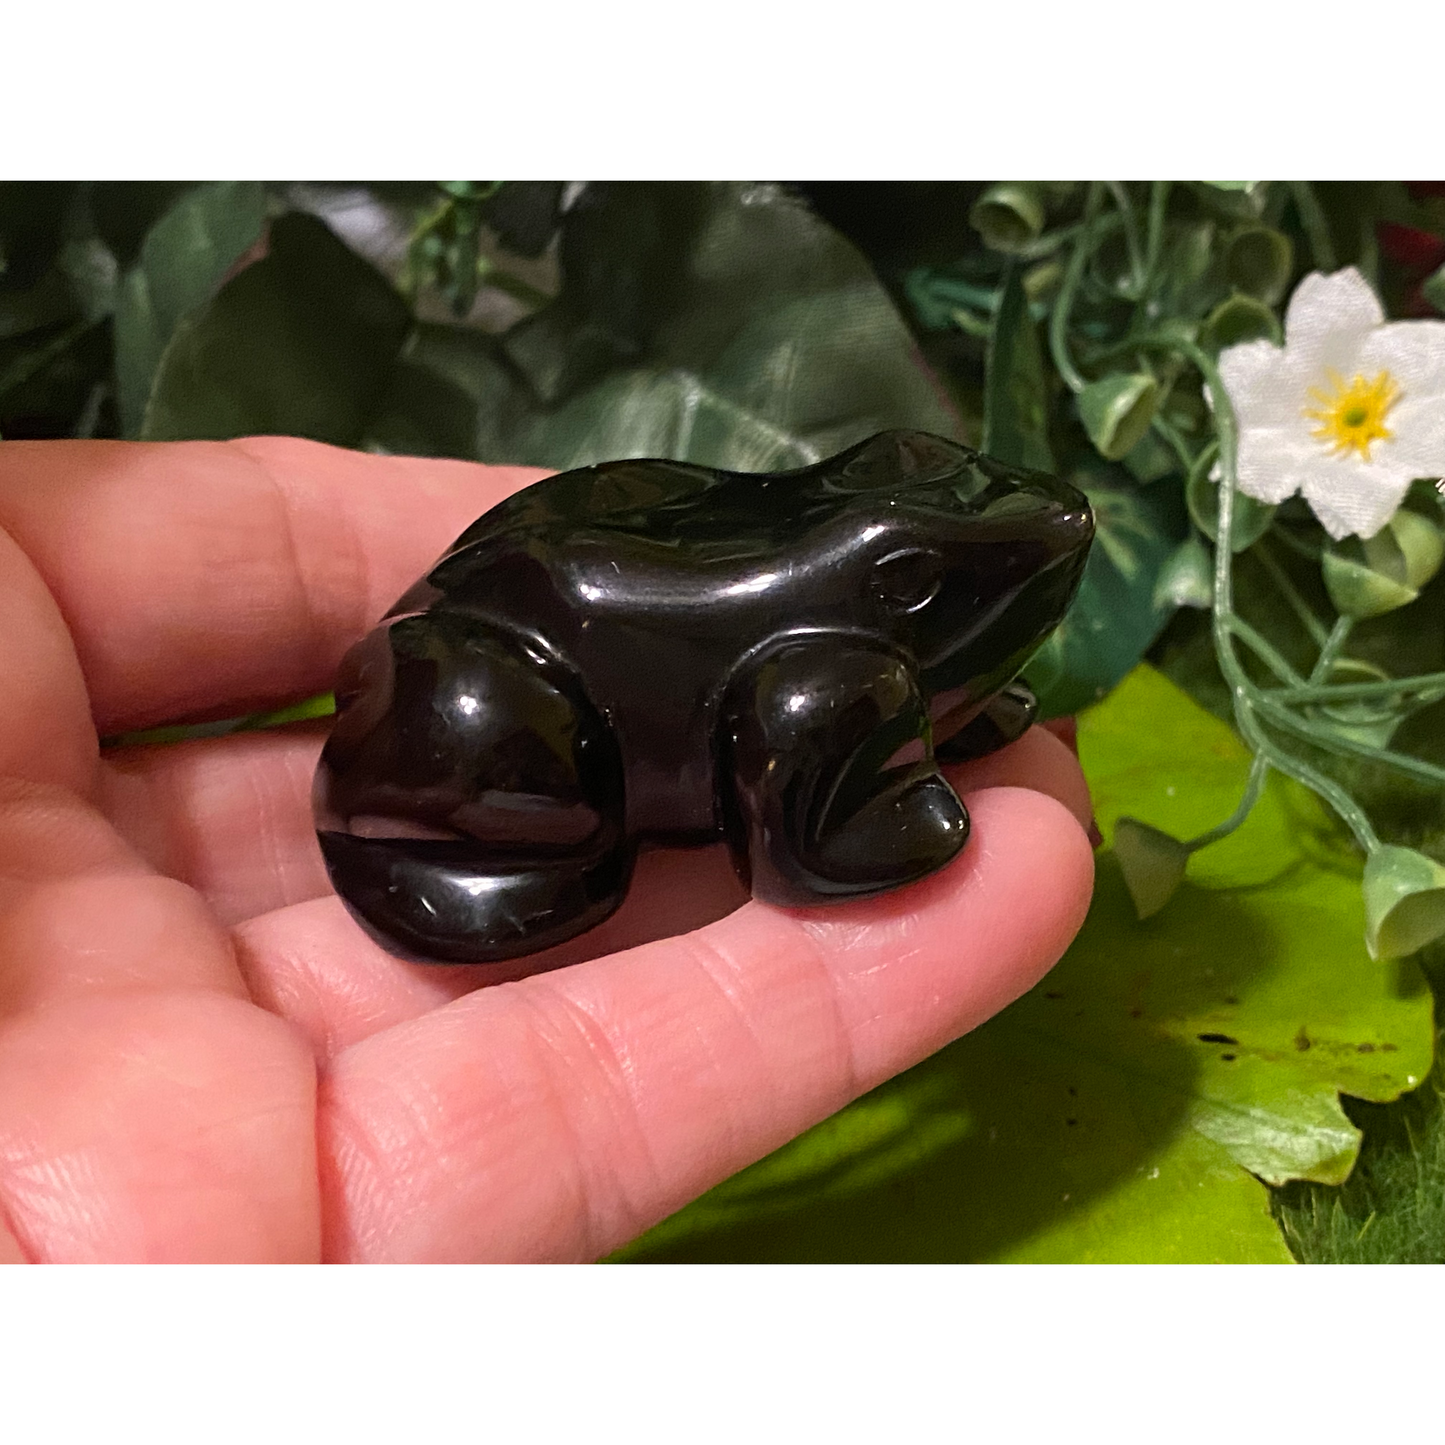 Invoke Frog energy to help with transformation, abundance & renewal!